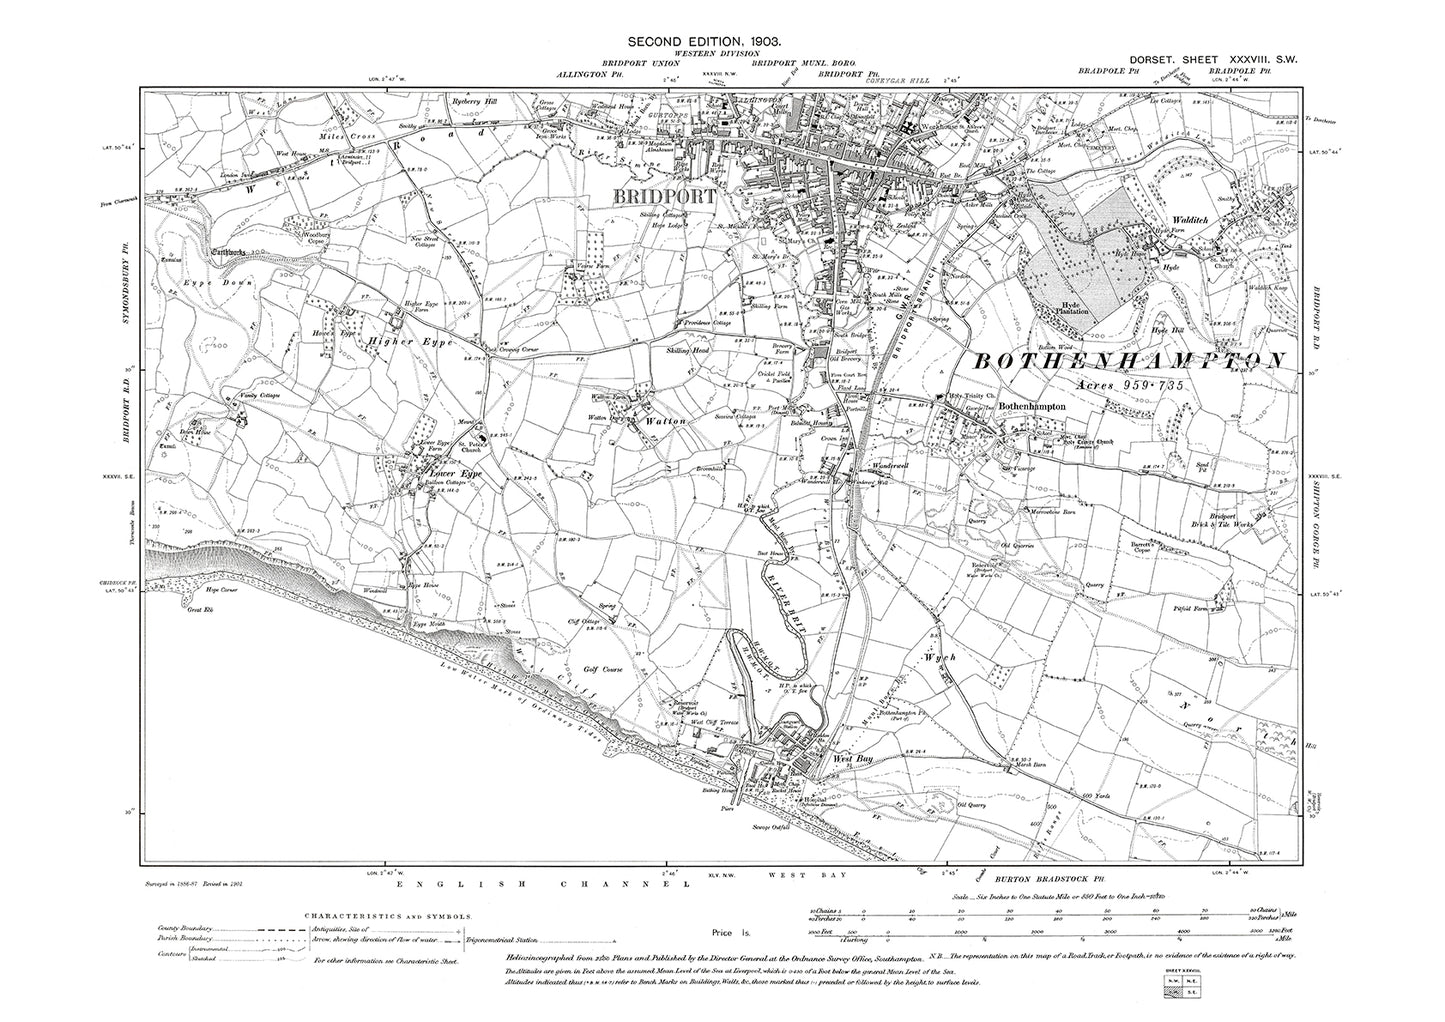 Old OS map dated 1903, showing Bridport, Bothenhampton, West Bay, Walditch, Eype in Dorset - 38SW